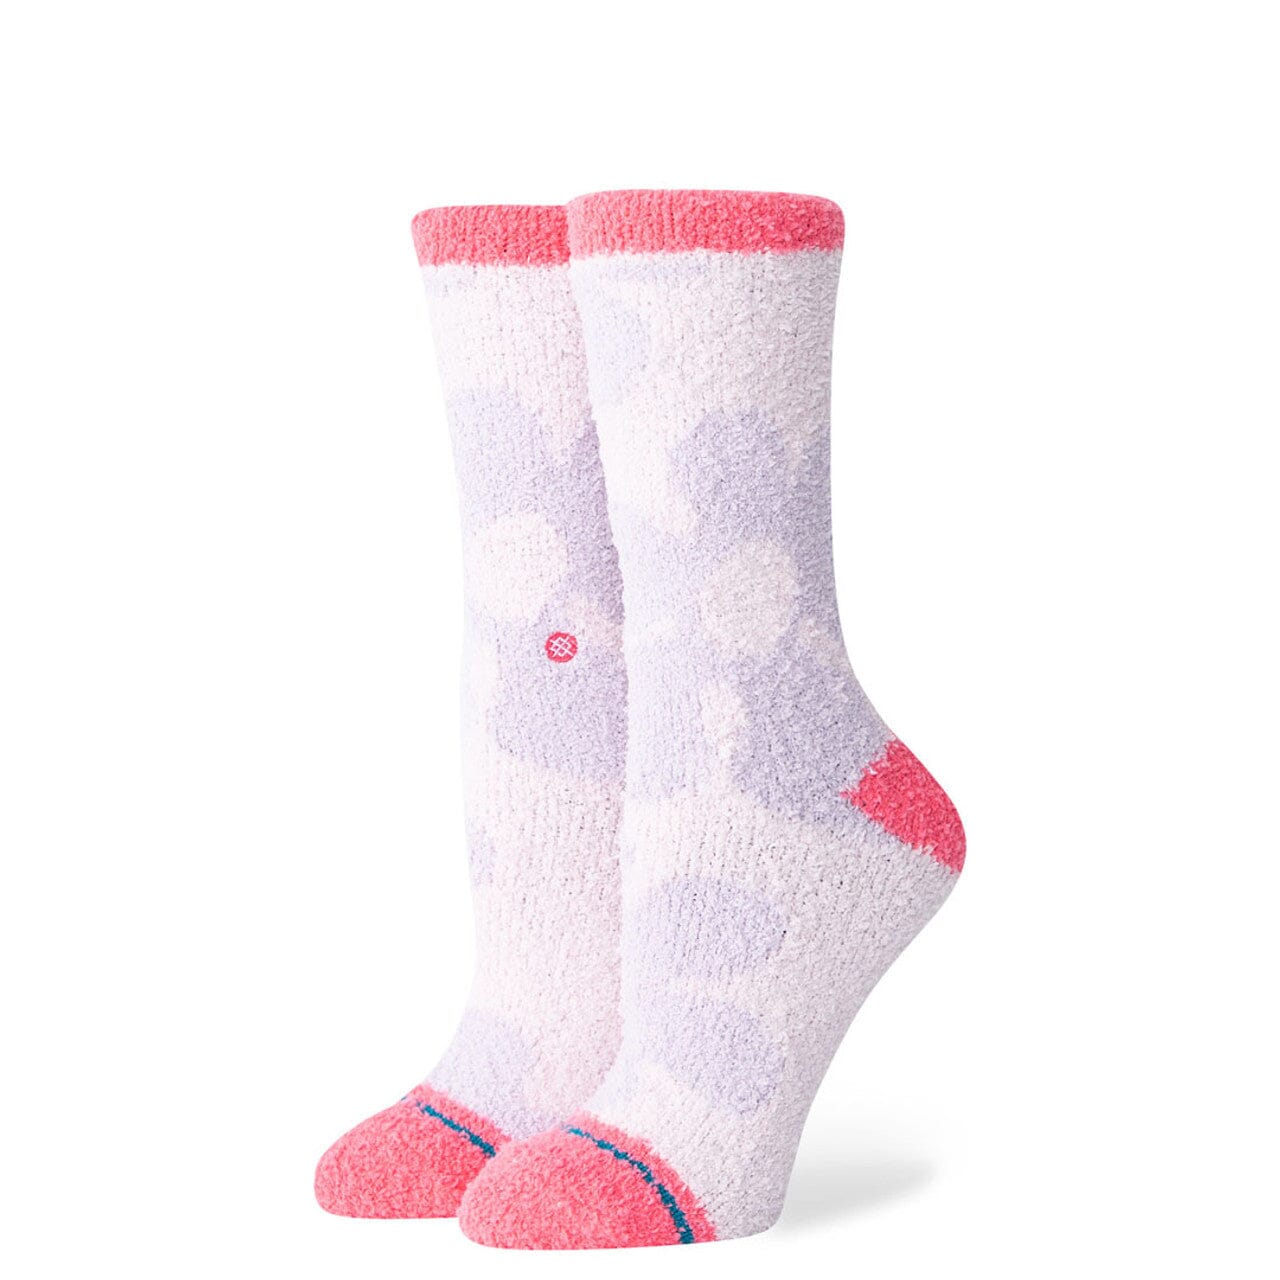 Chillax Fuzzy Crew Socks | Women's - Knock Your Socks Off